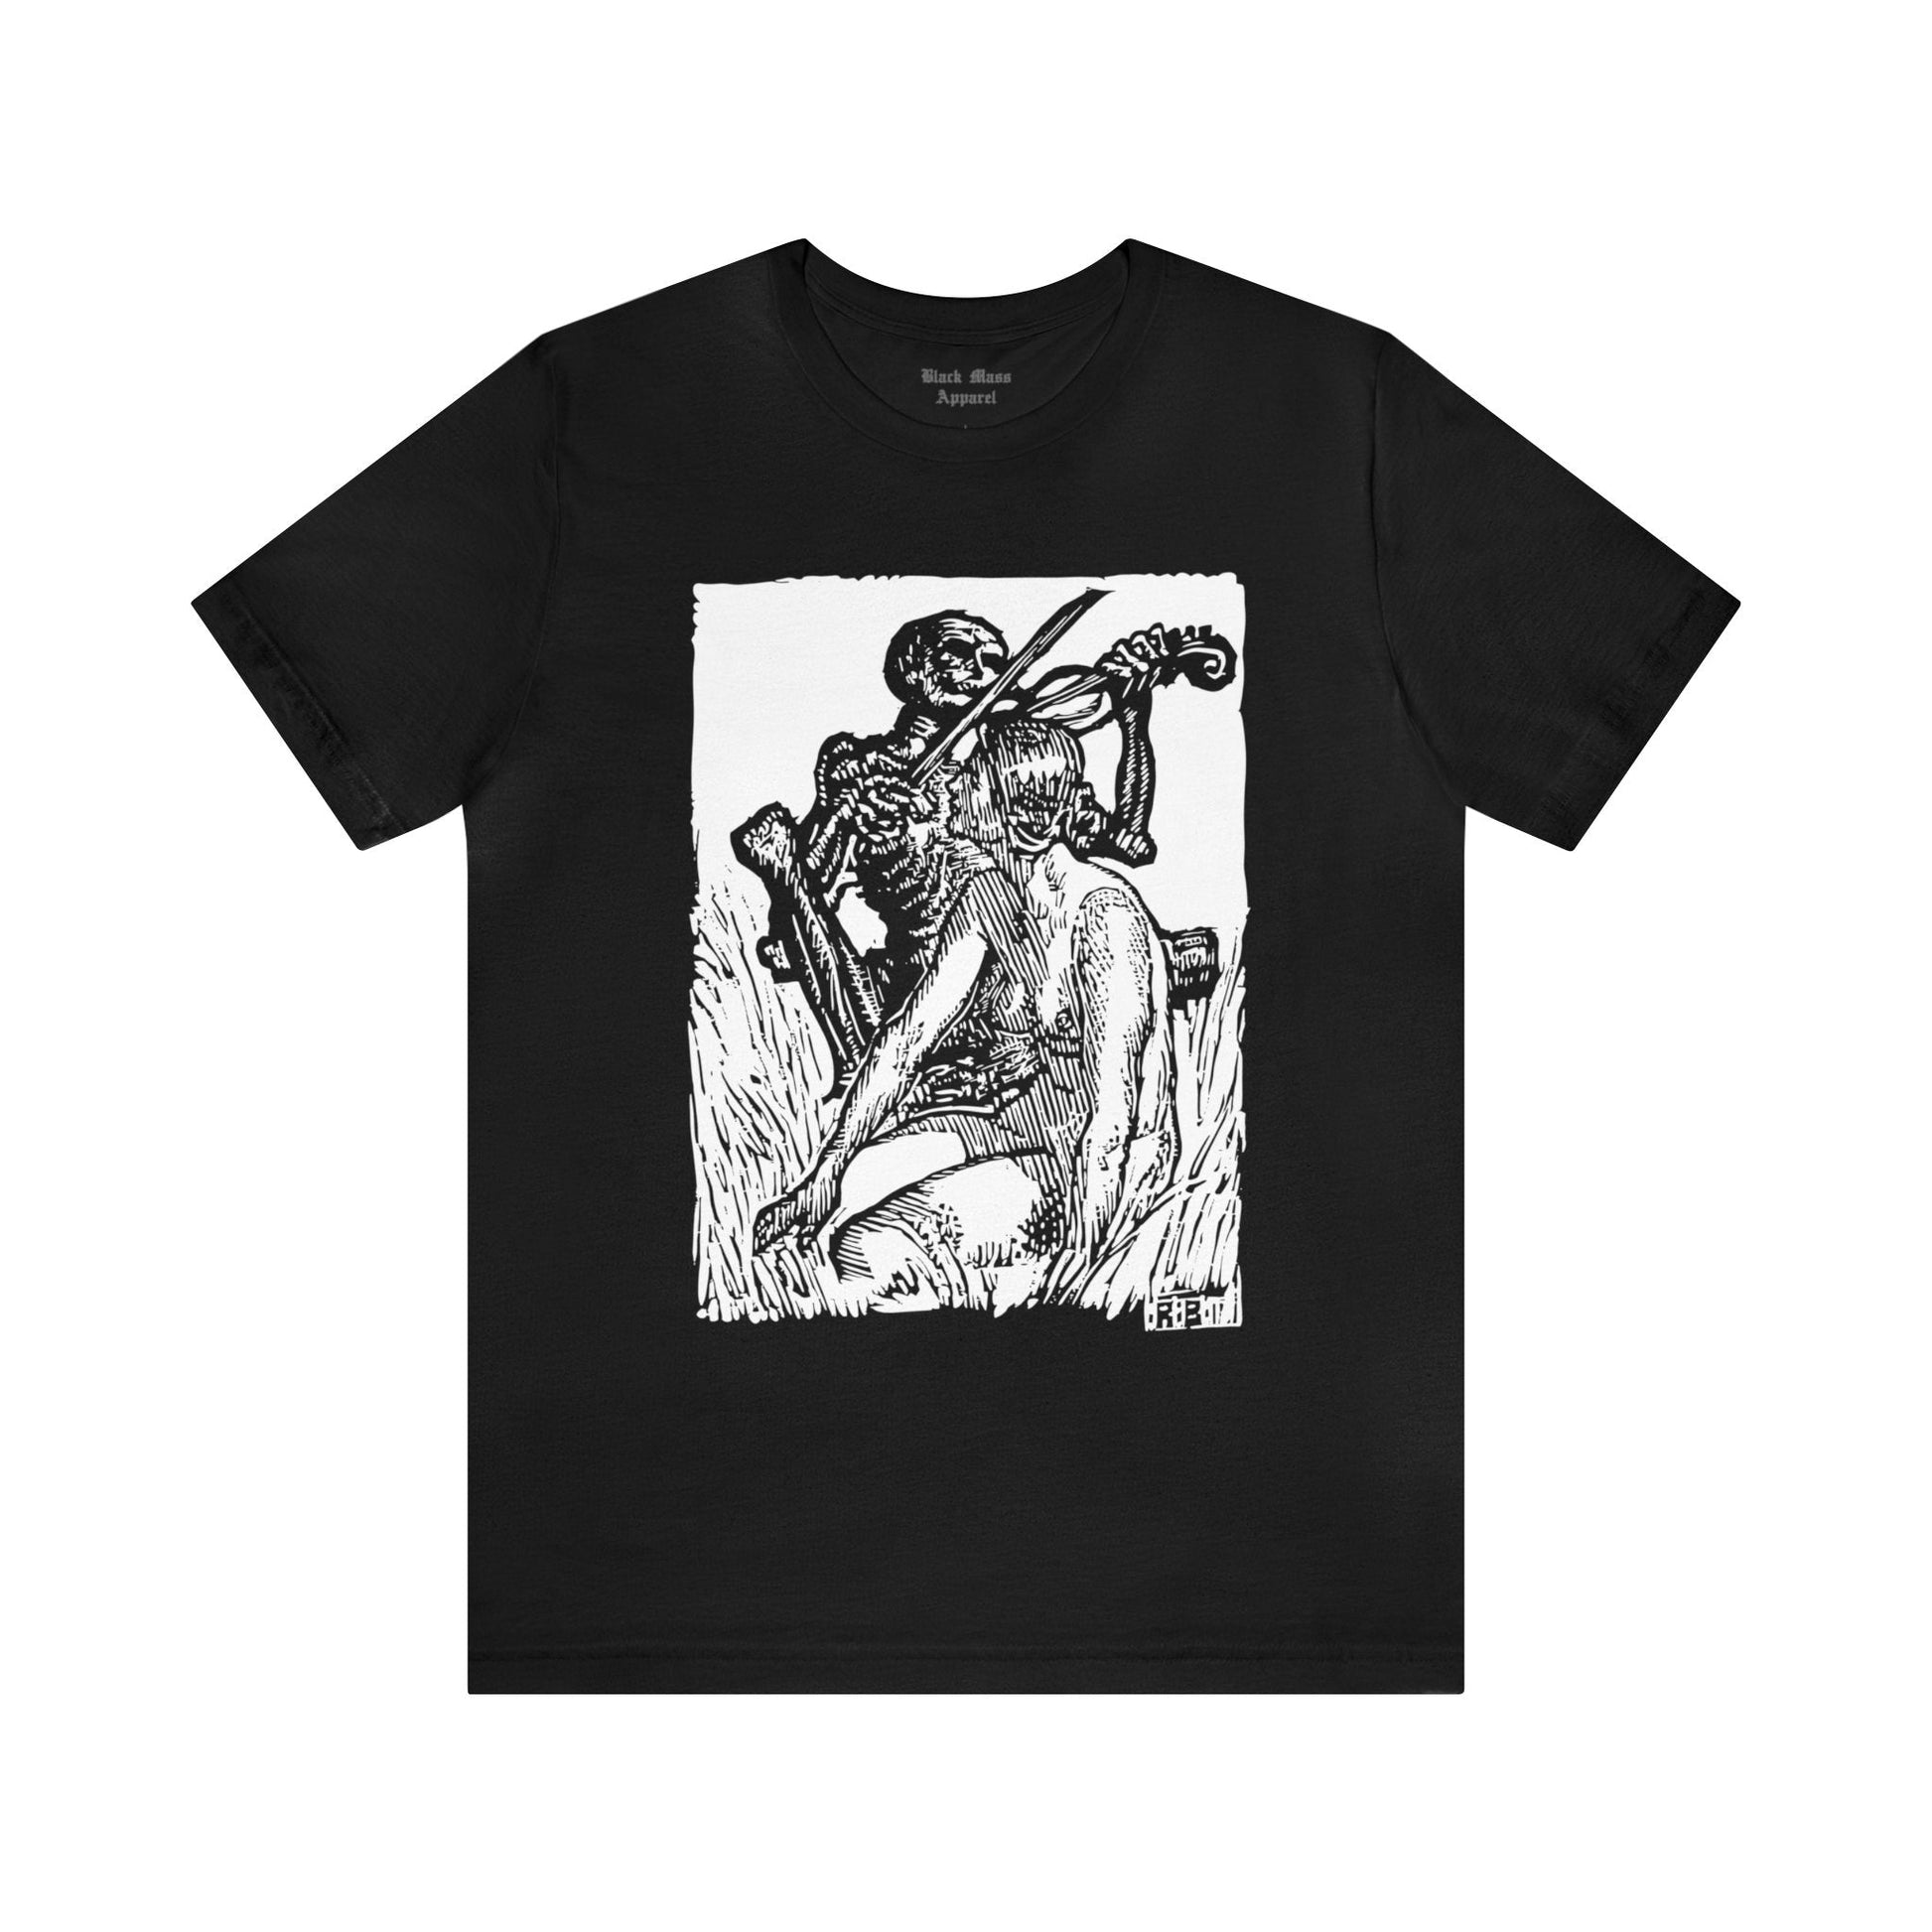 Totentanz III - Black Mass Apparel - T-Shirt